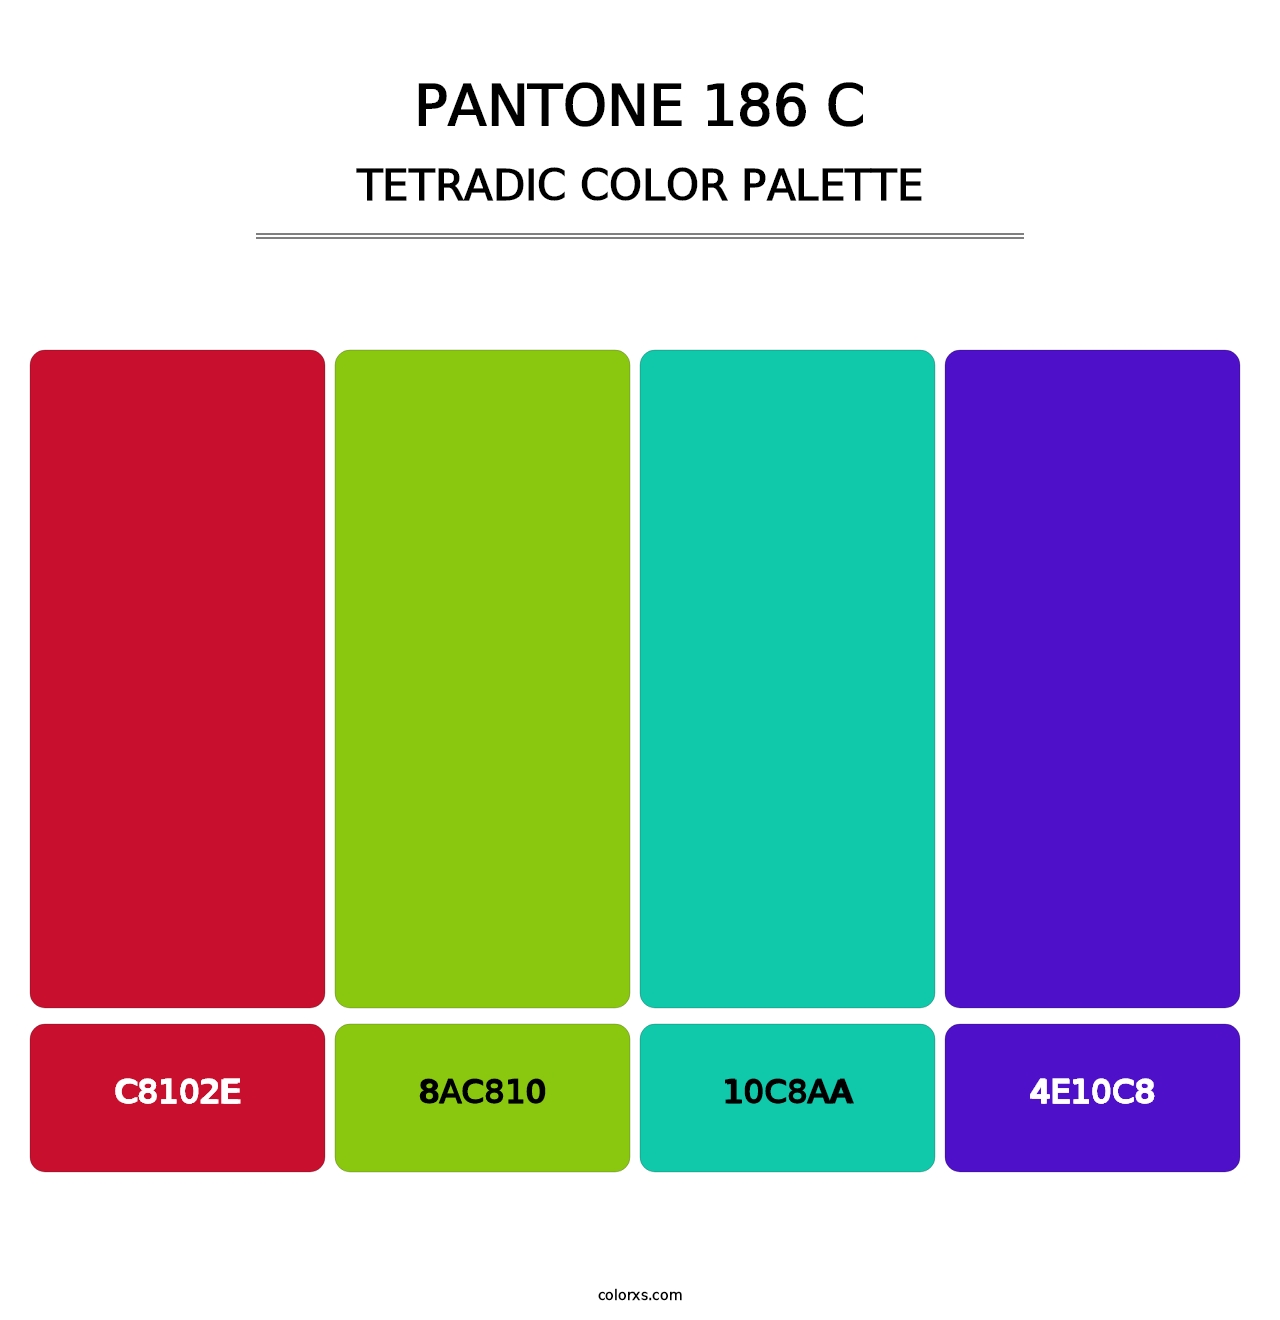 PANTONE 186 C - Tetradic Color Palette